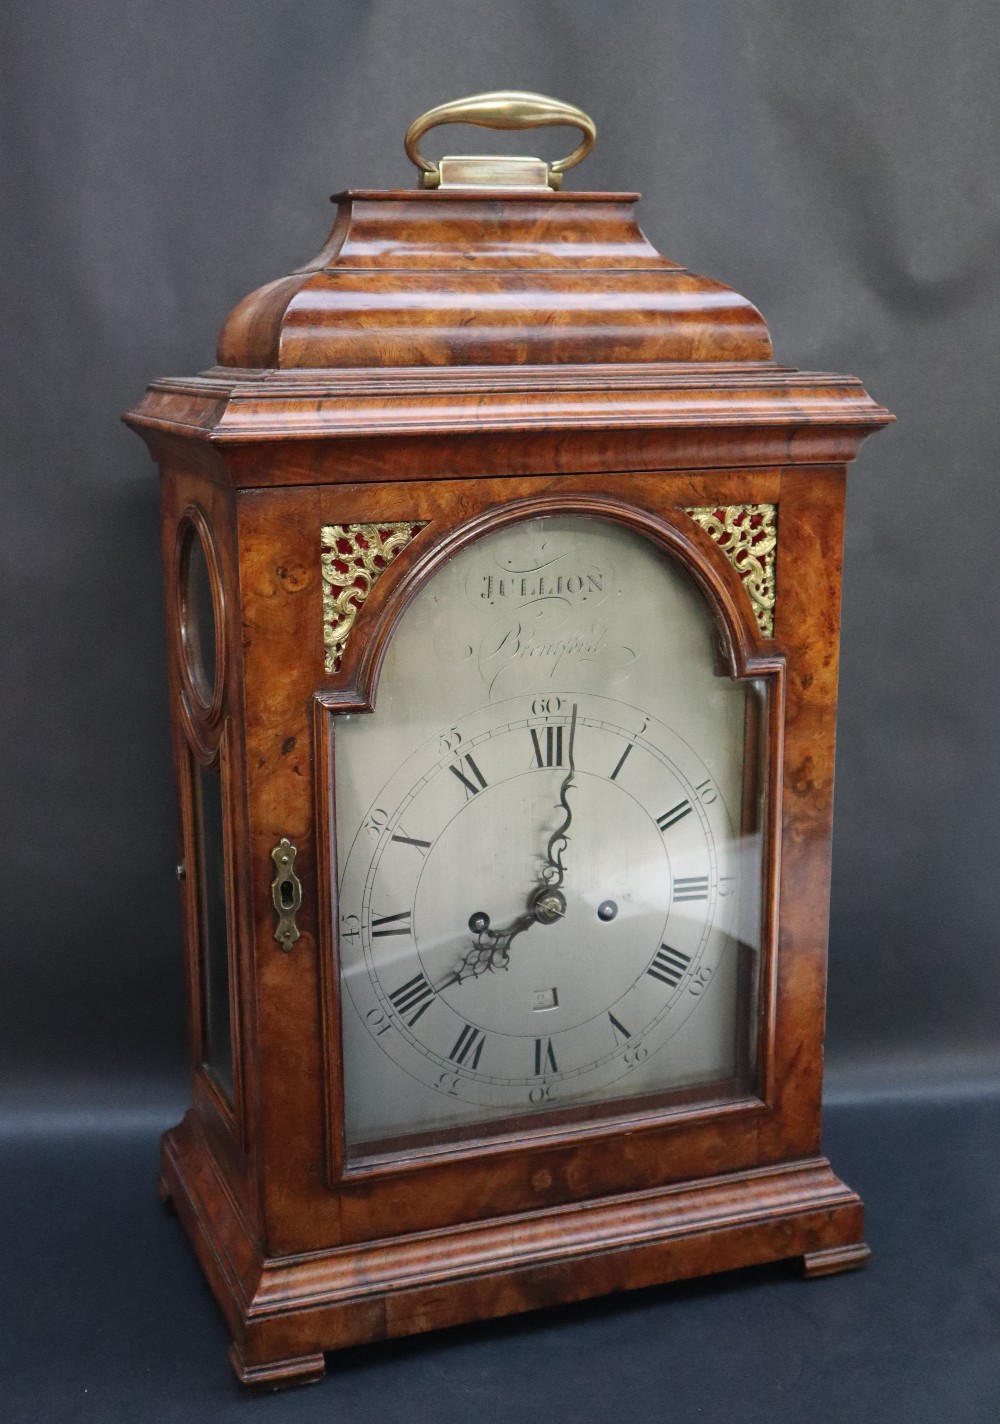 An 18th century walnut cased bracket clock, the silvered dial signed "Jullion,